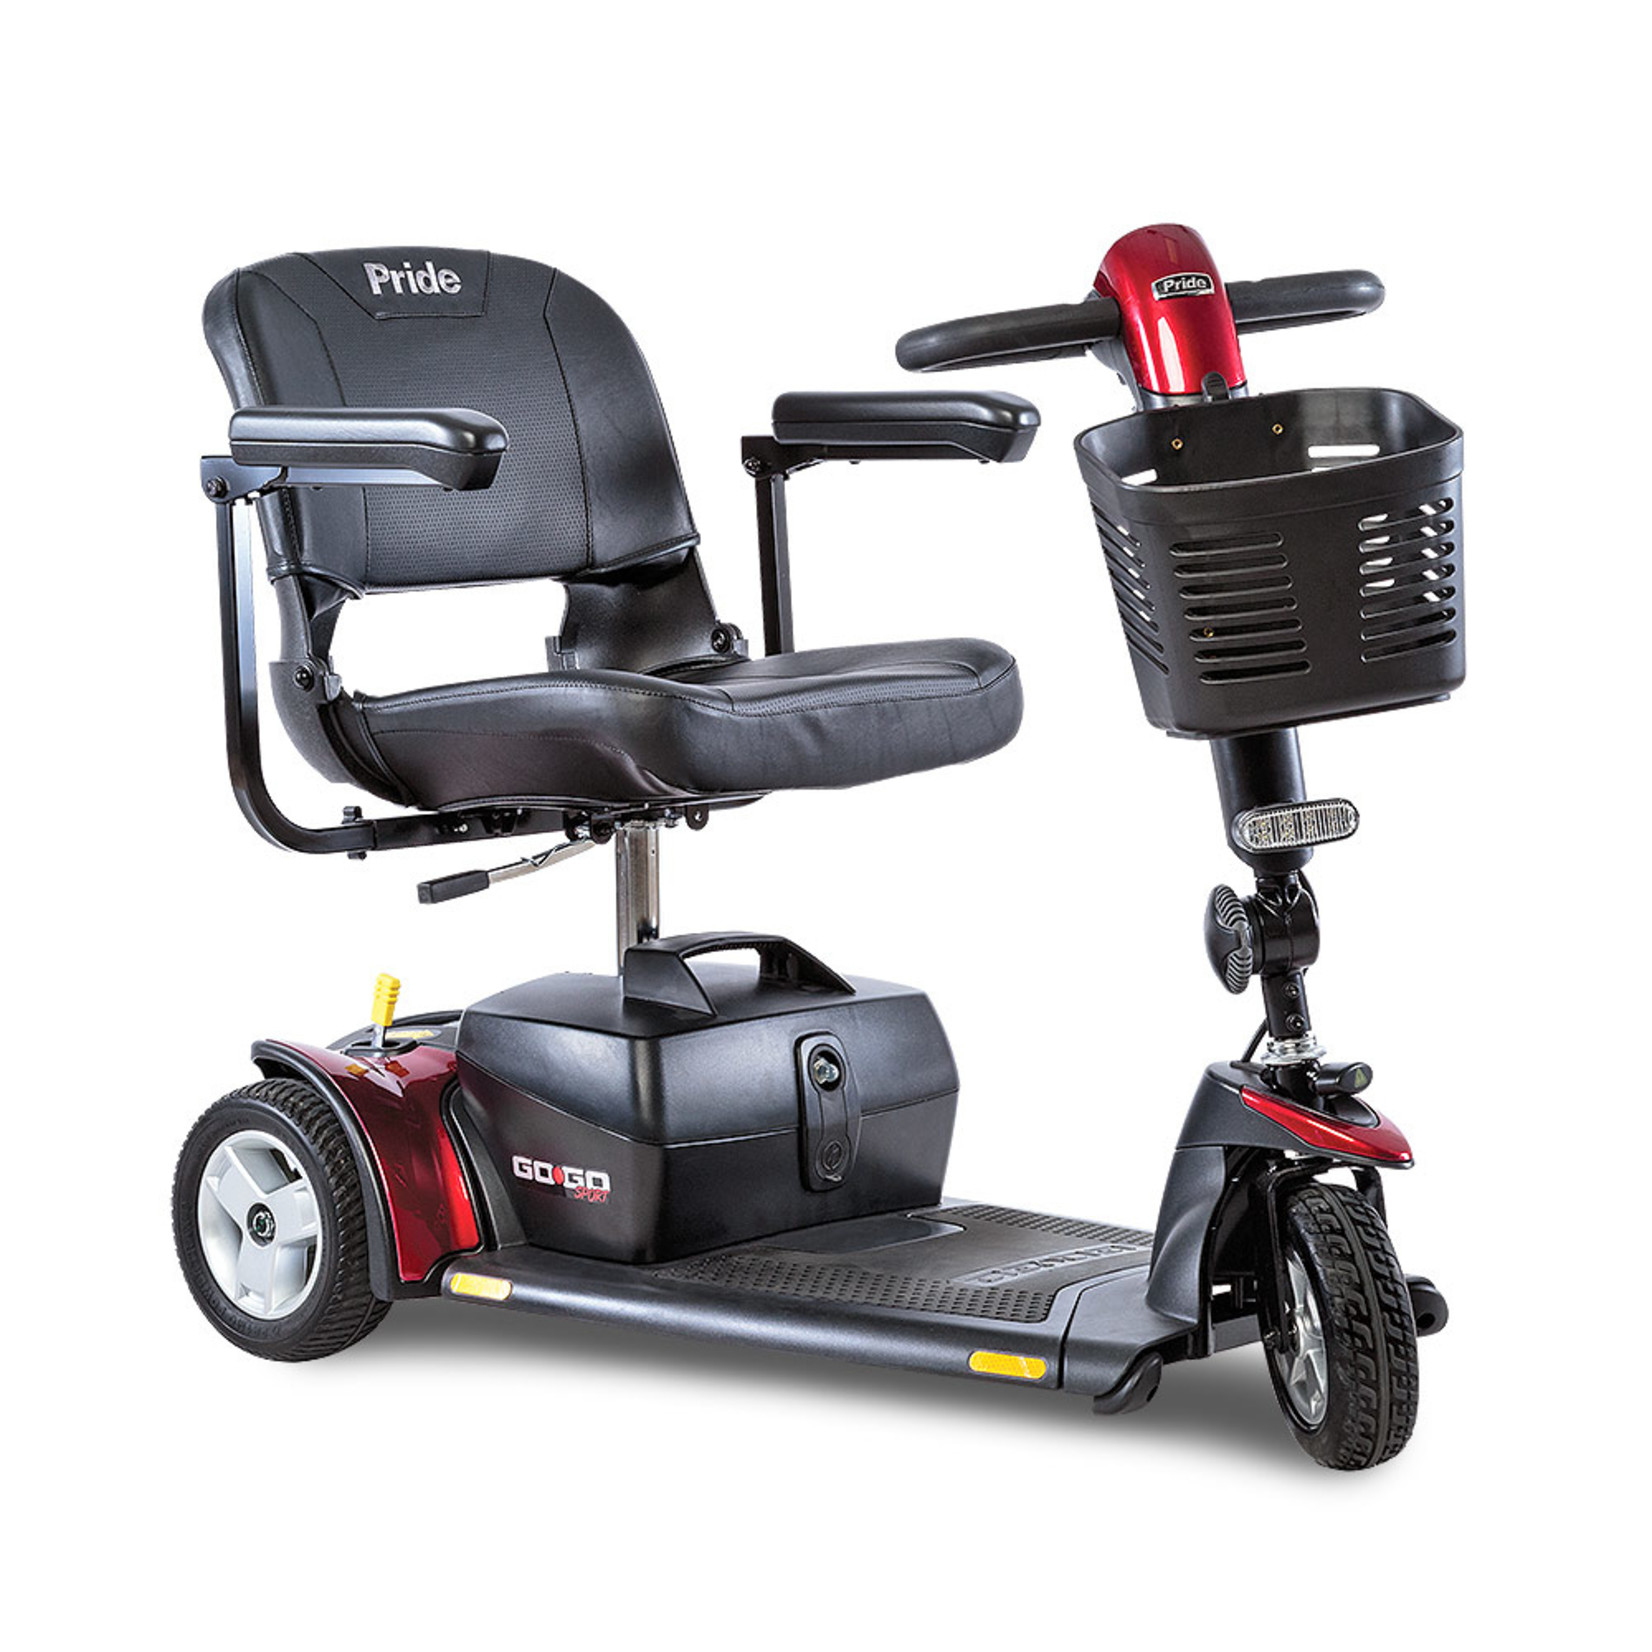 https://cdn.shoplightspeed.com/shops/648439/files/43308110/1652x1652x2/pride-go-go-sport-3-wheel-mobility-scooter.jpg